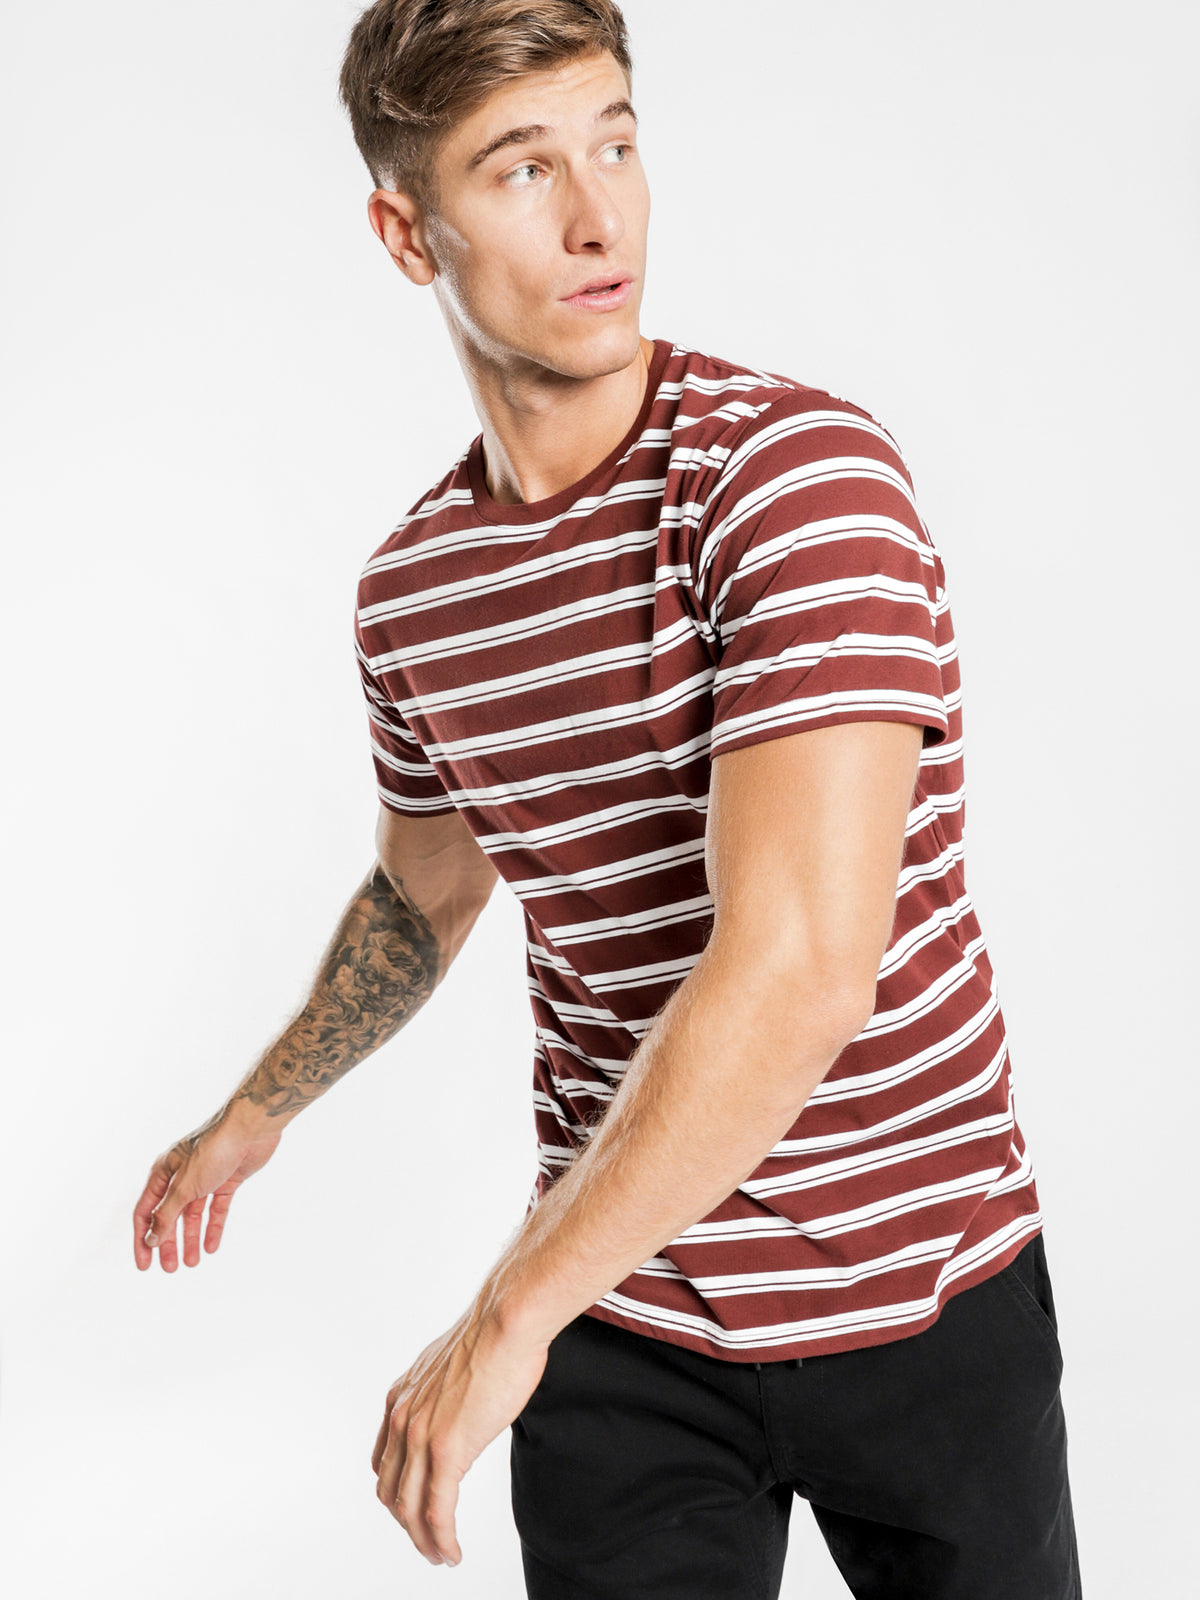 Cayo Short Sleeve Stripe T-Shirt in Wine